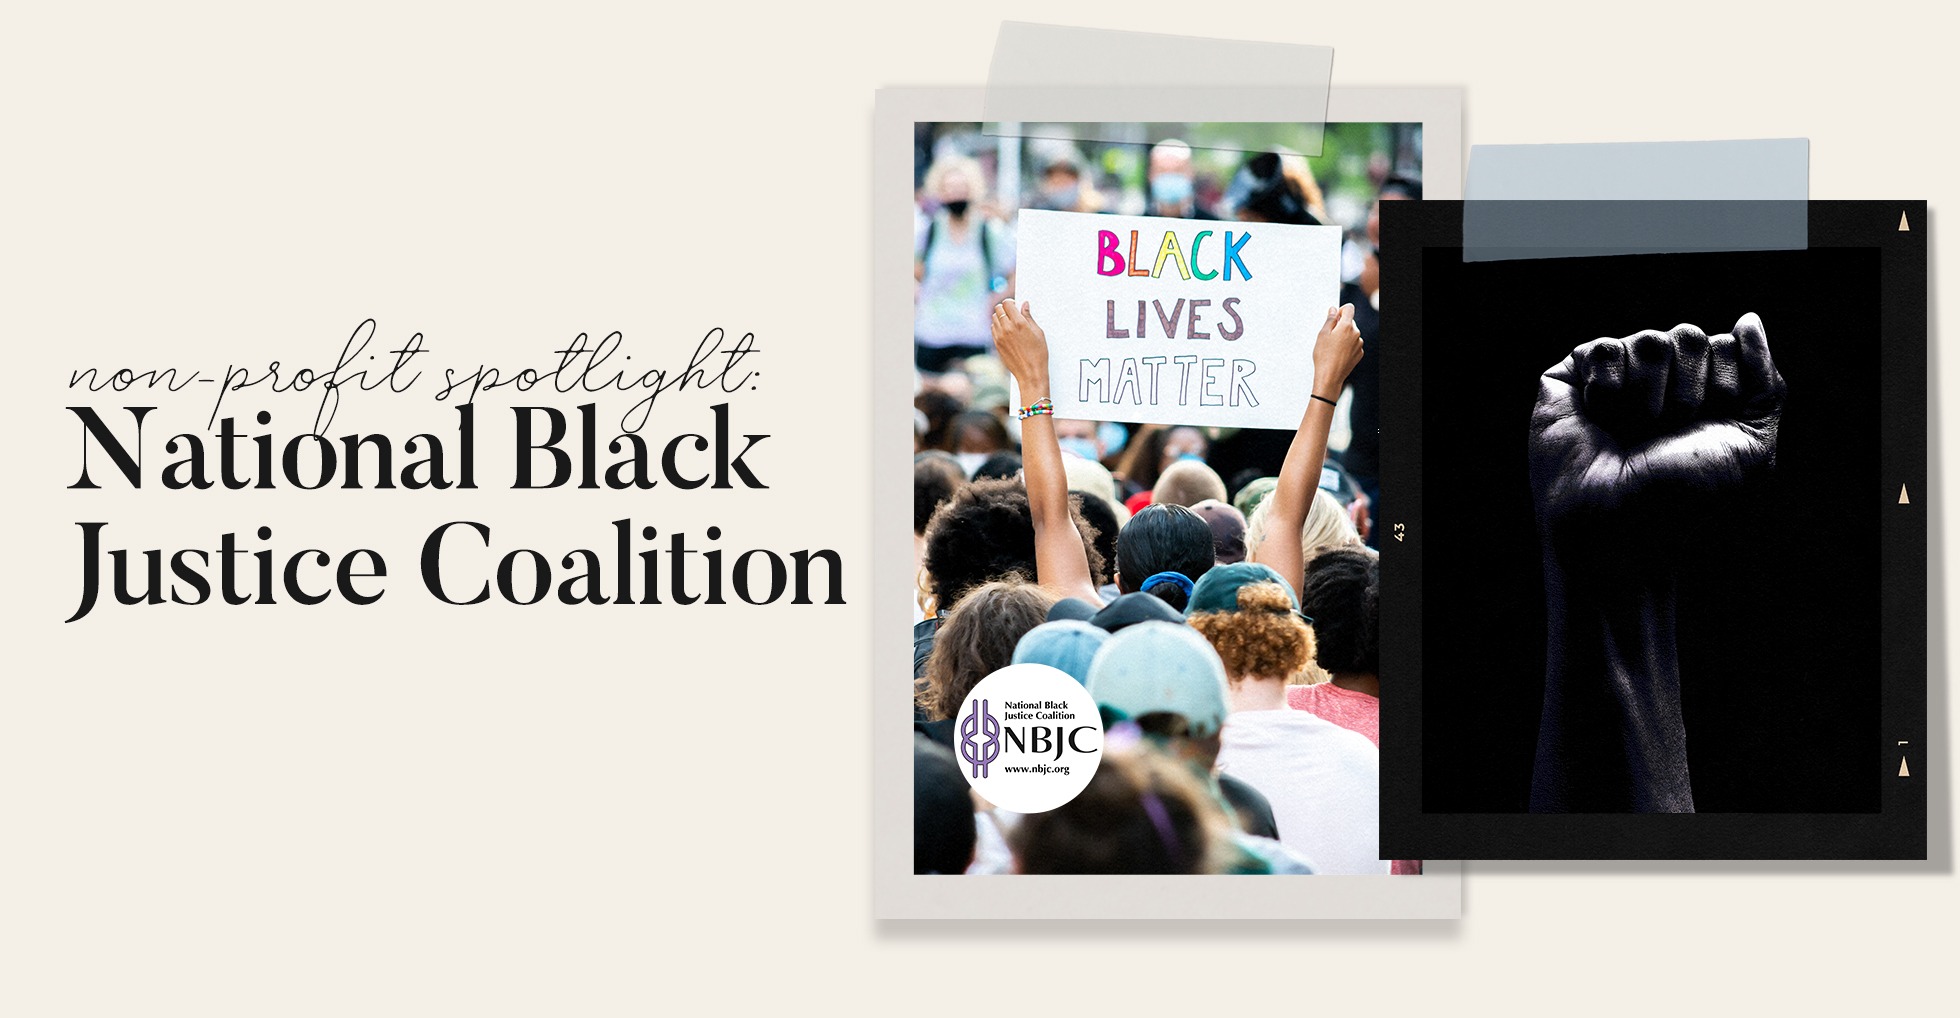 National Black Justice Coalition: NP Spotlight